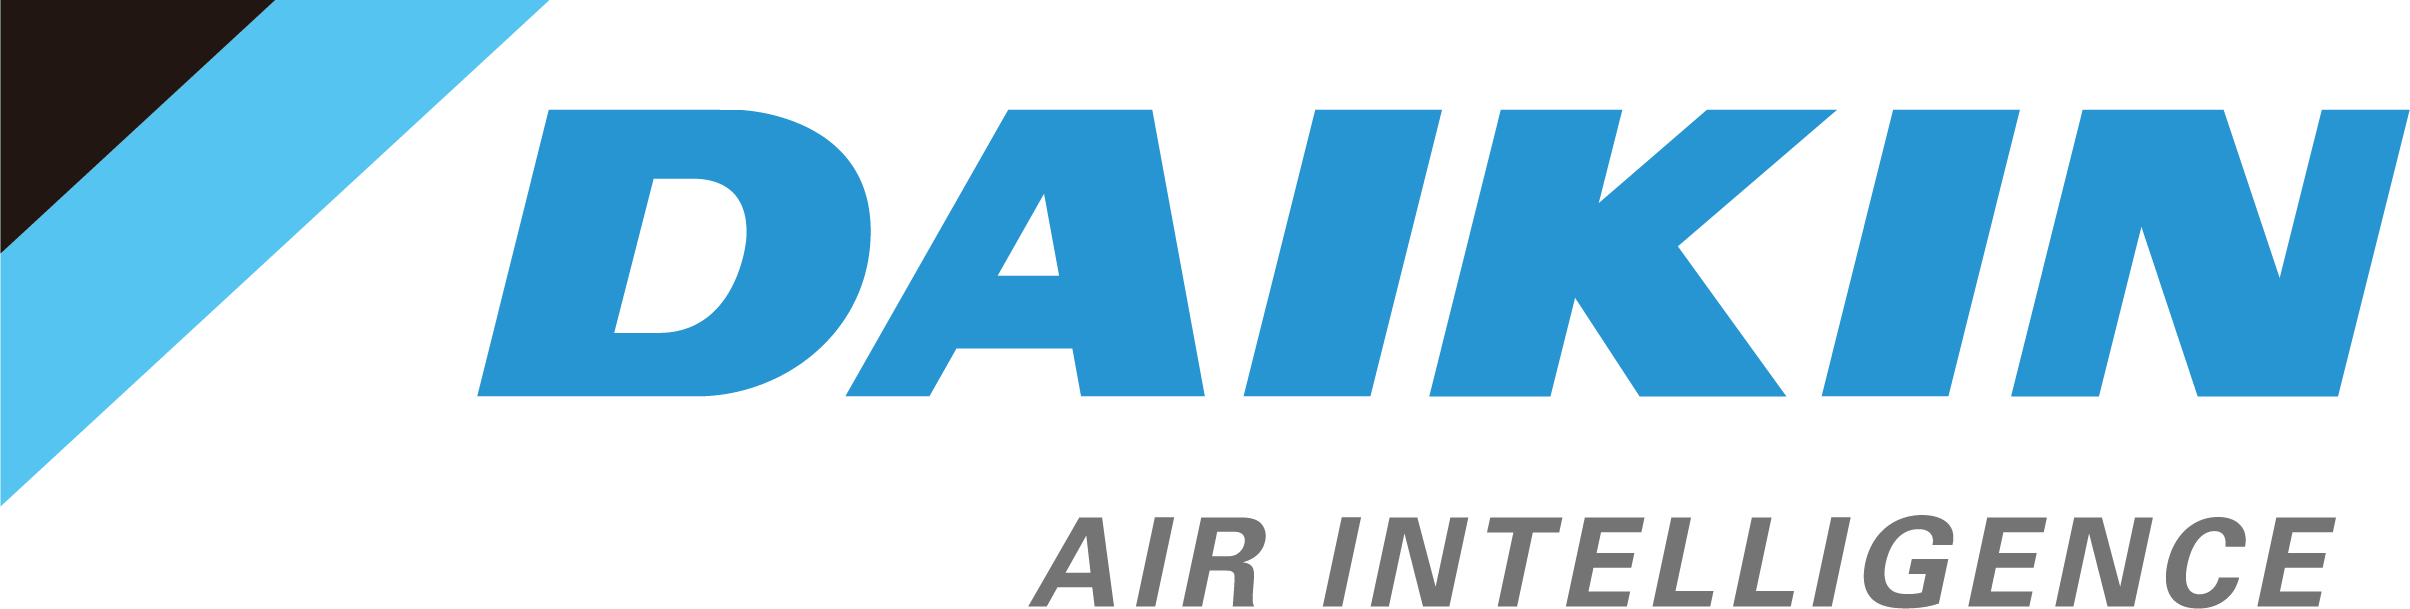 Daikin_Air_Intelligence_Logo_HR31419 (1)